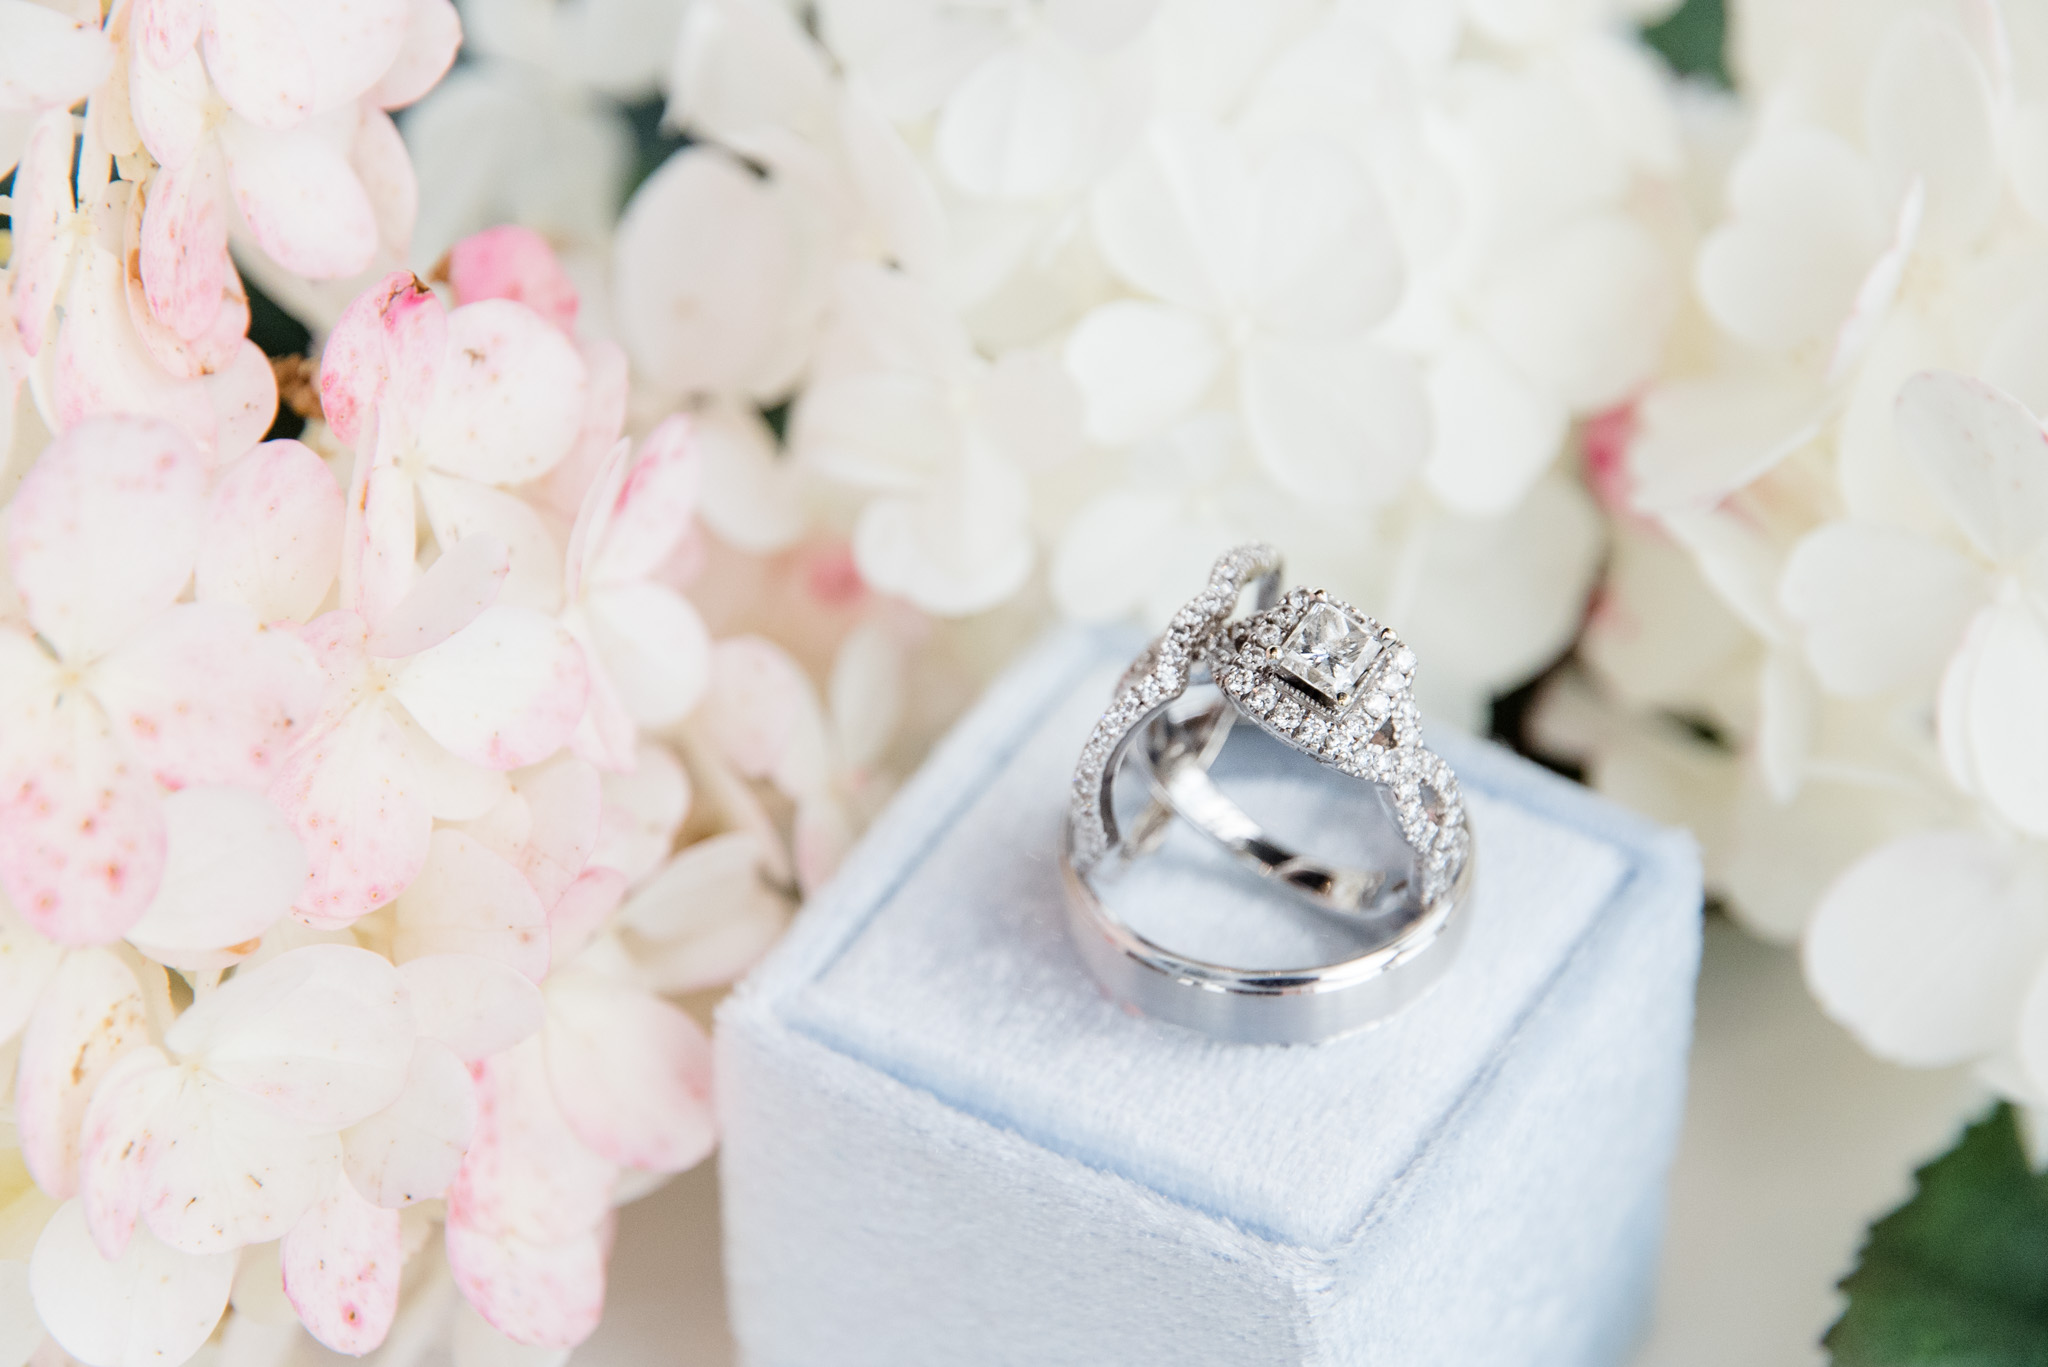 Wedding rings balance next to flowers.